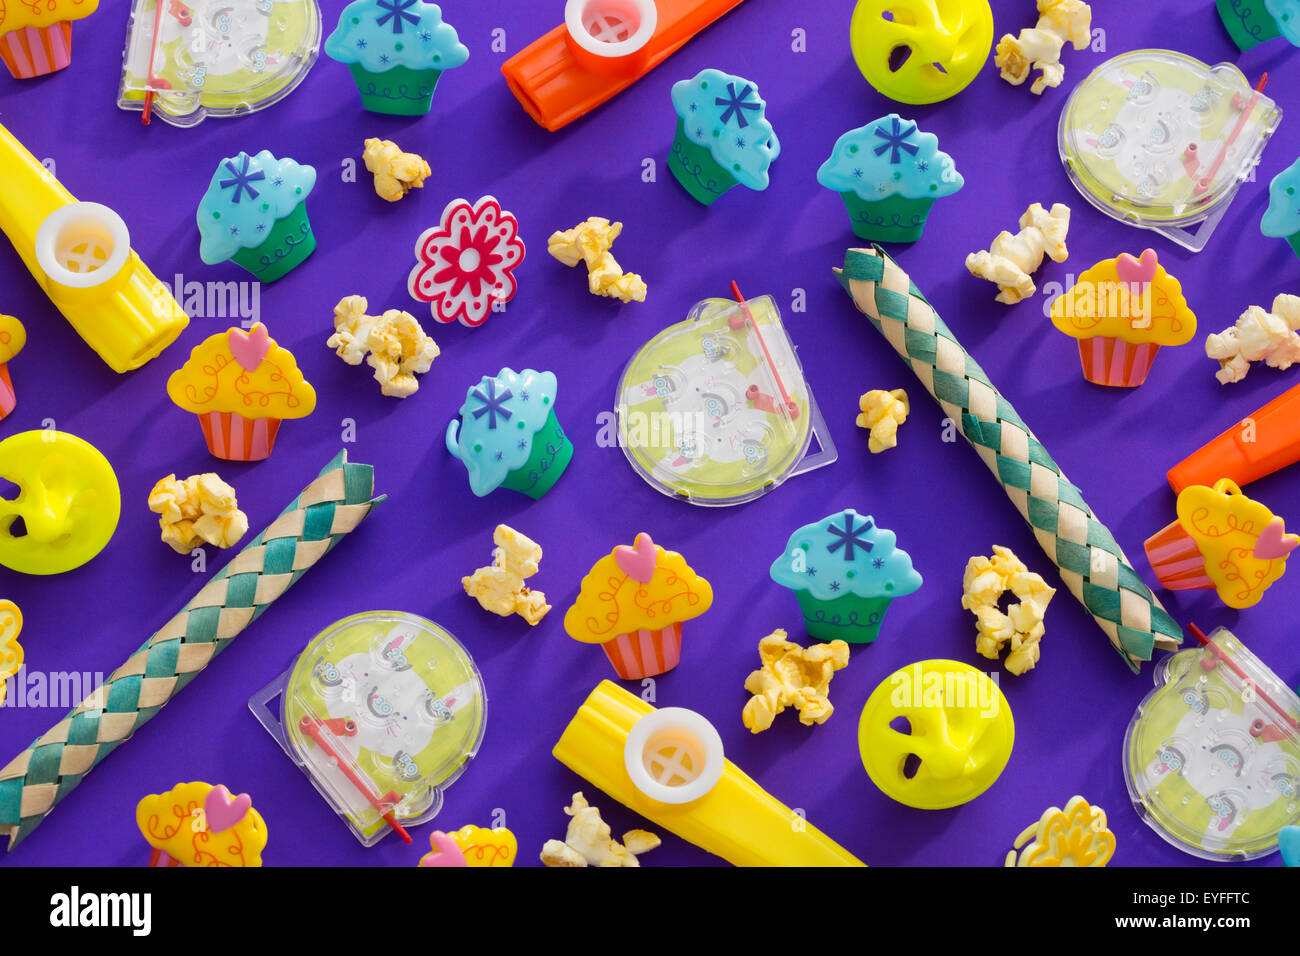 Variation of plastic toys Stock Photo